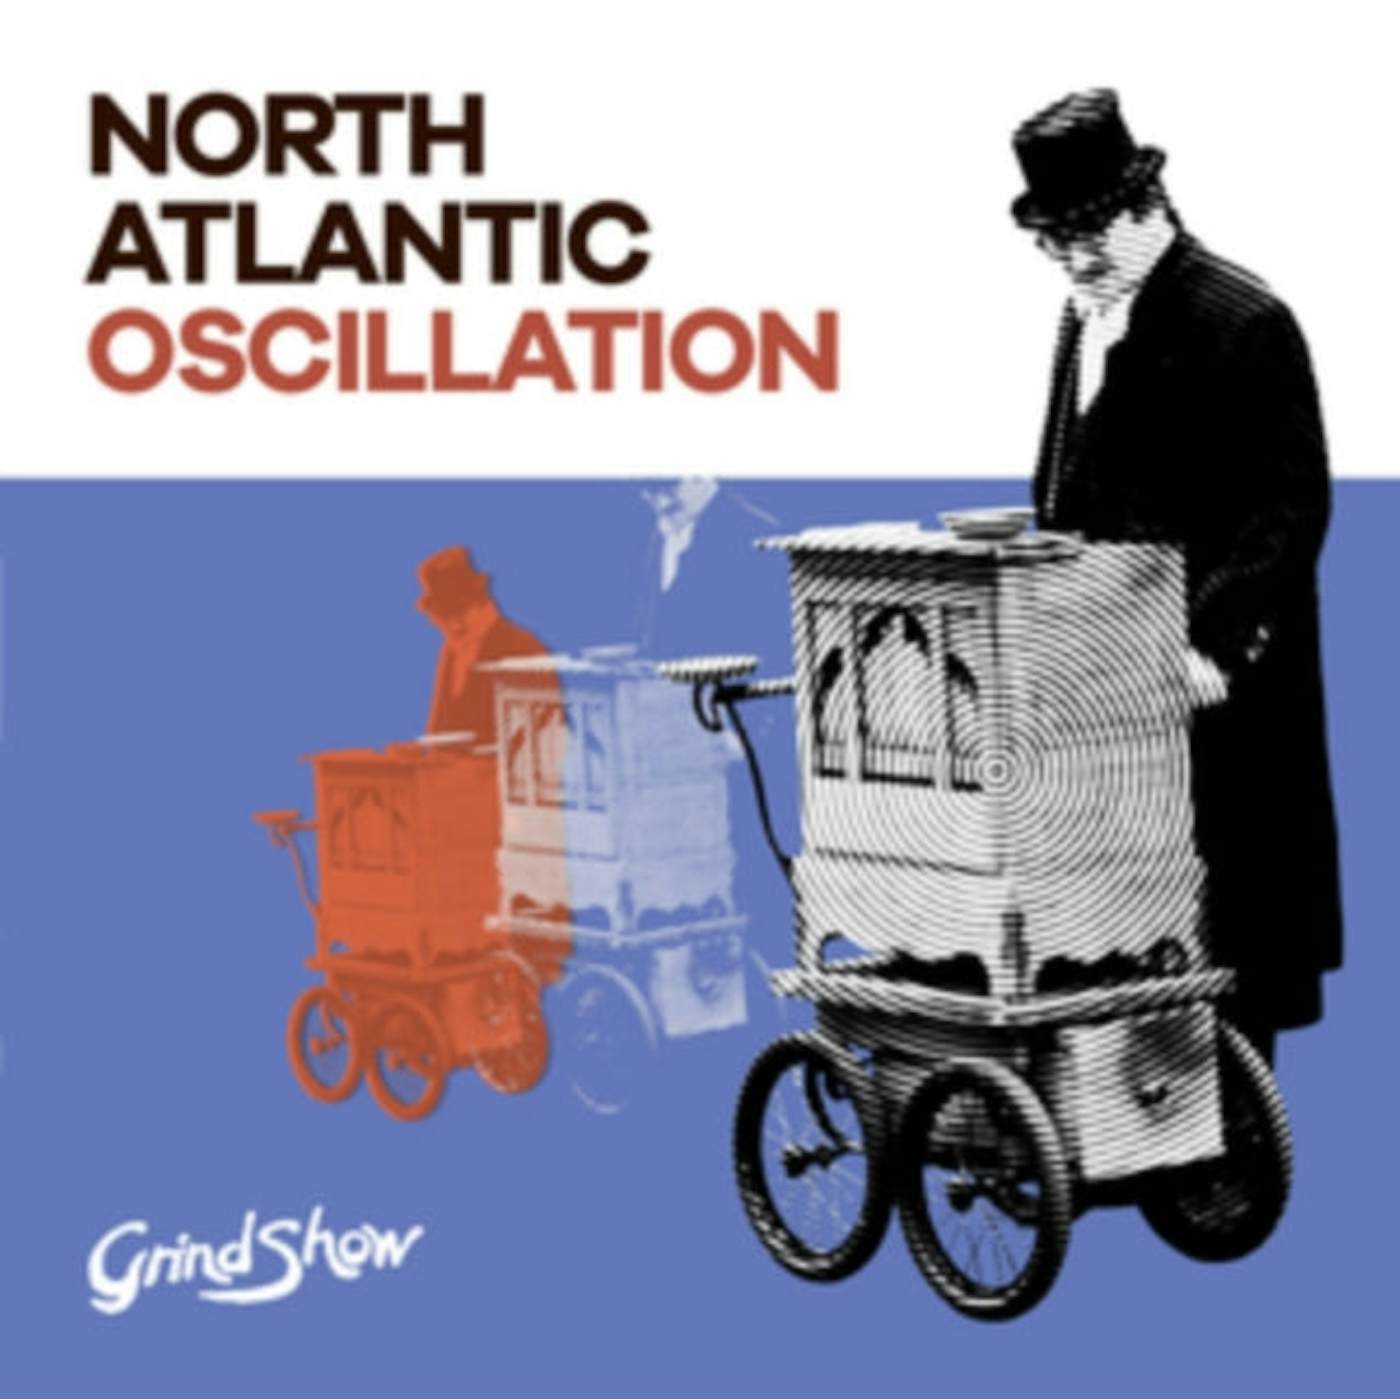 North Atlantic Oscillation CD - Grind Show